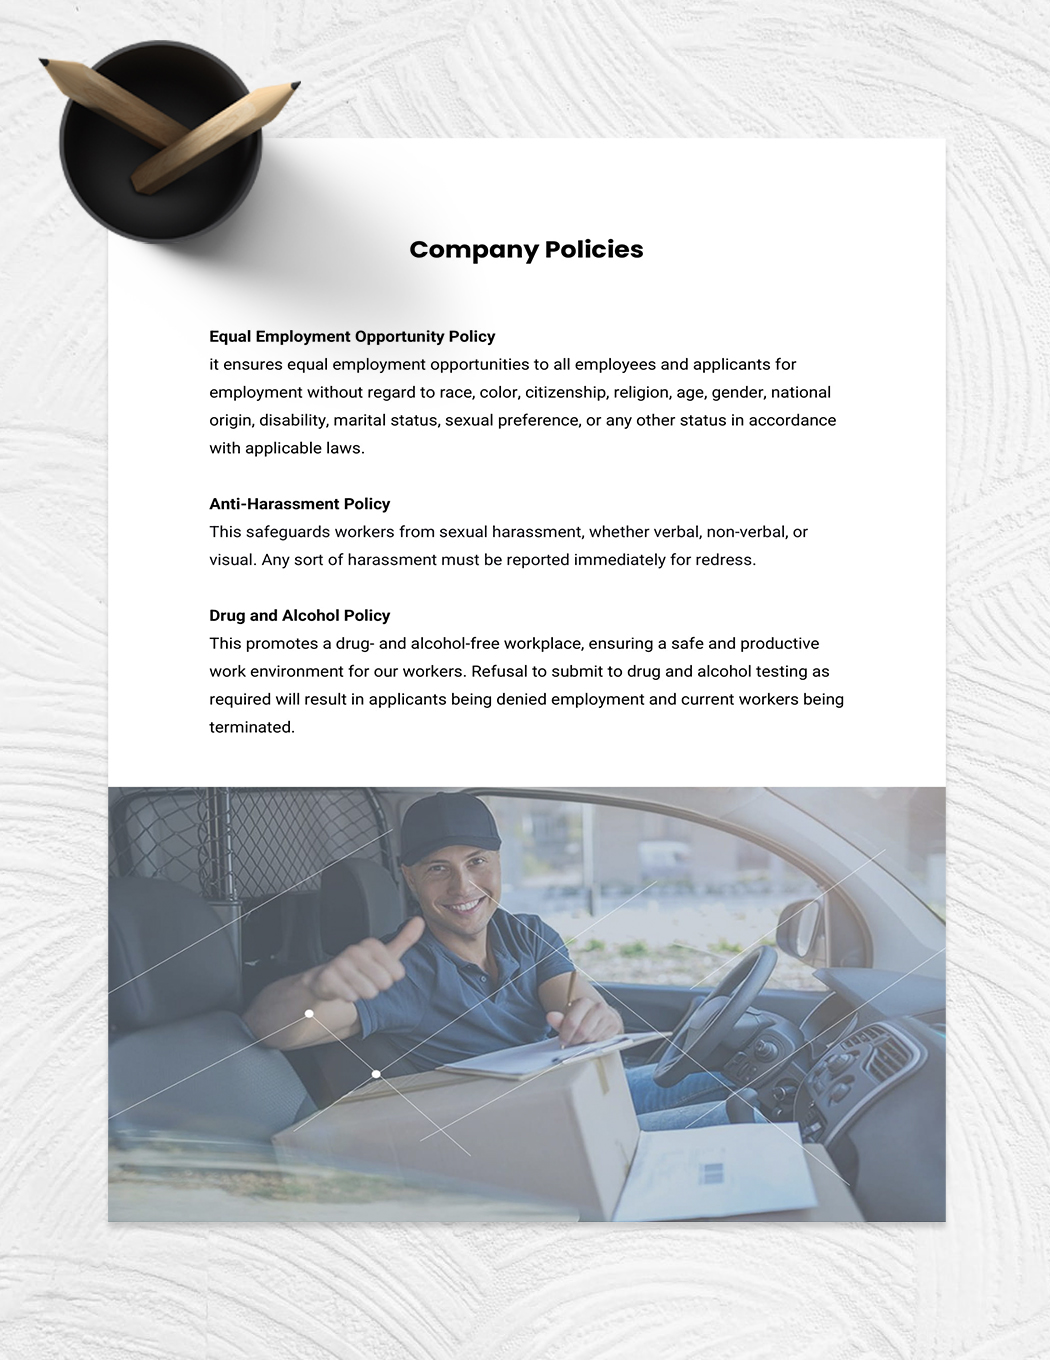 Trucking Company Handbook Template